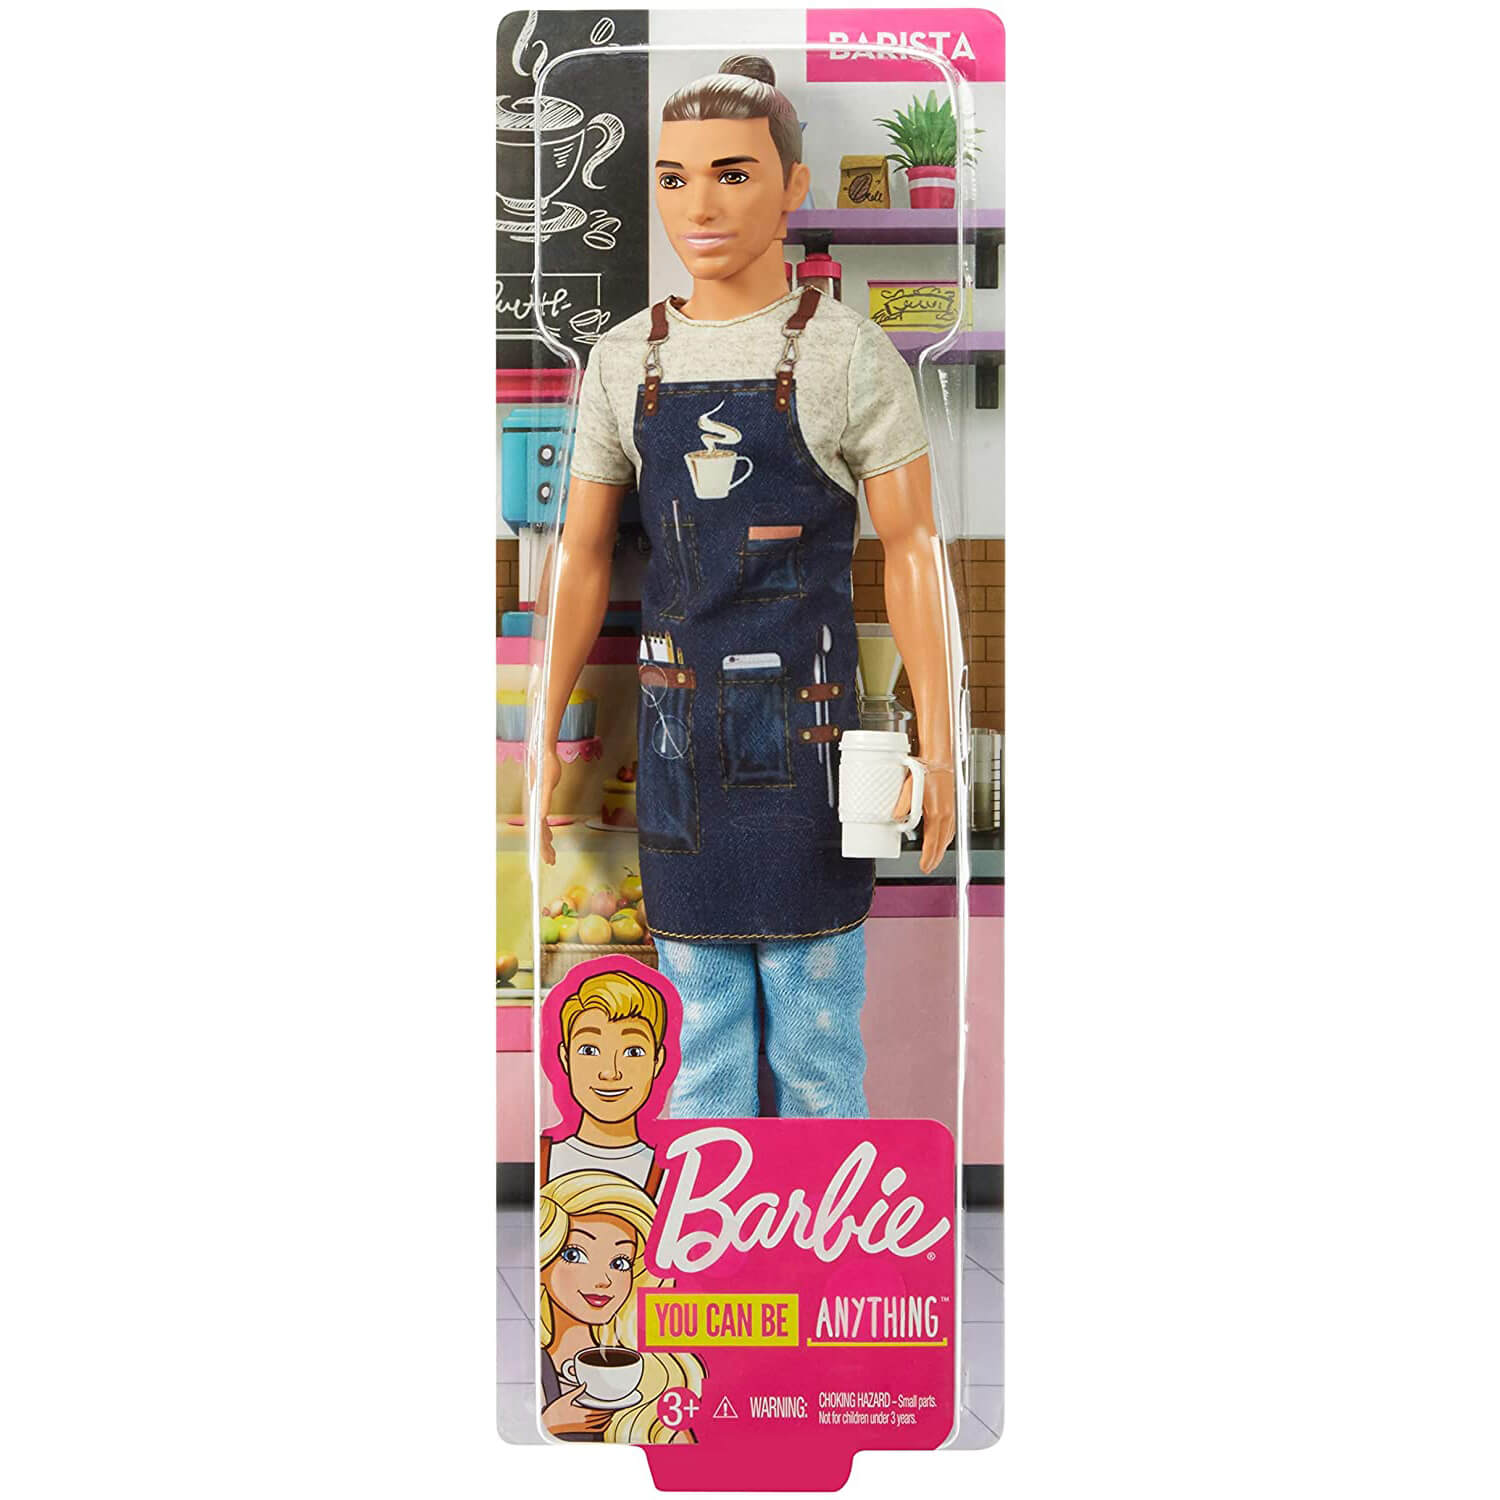 Barbie Ken Barista Career Doll, Broad, Wearing Café Apron